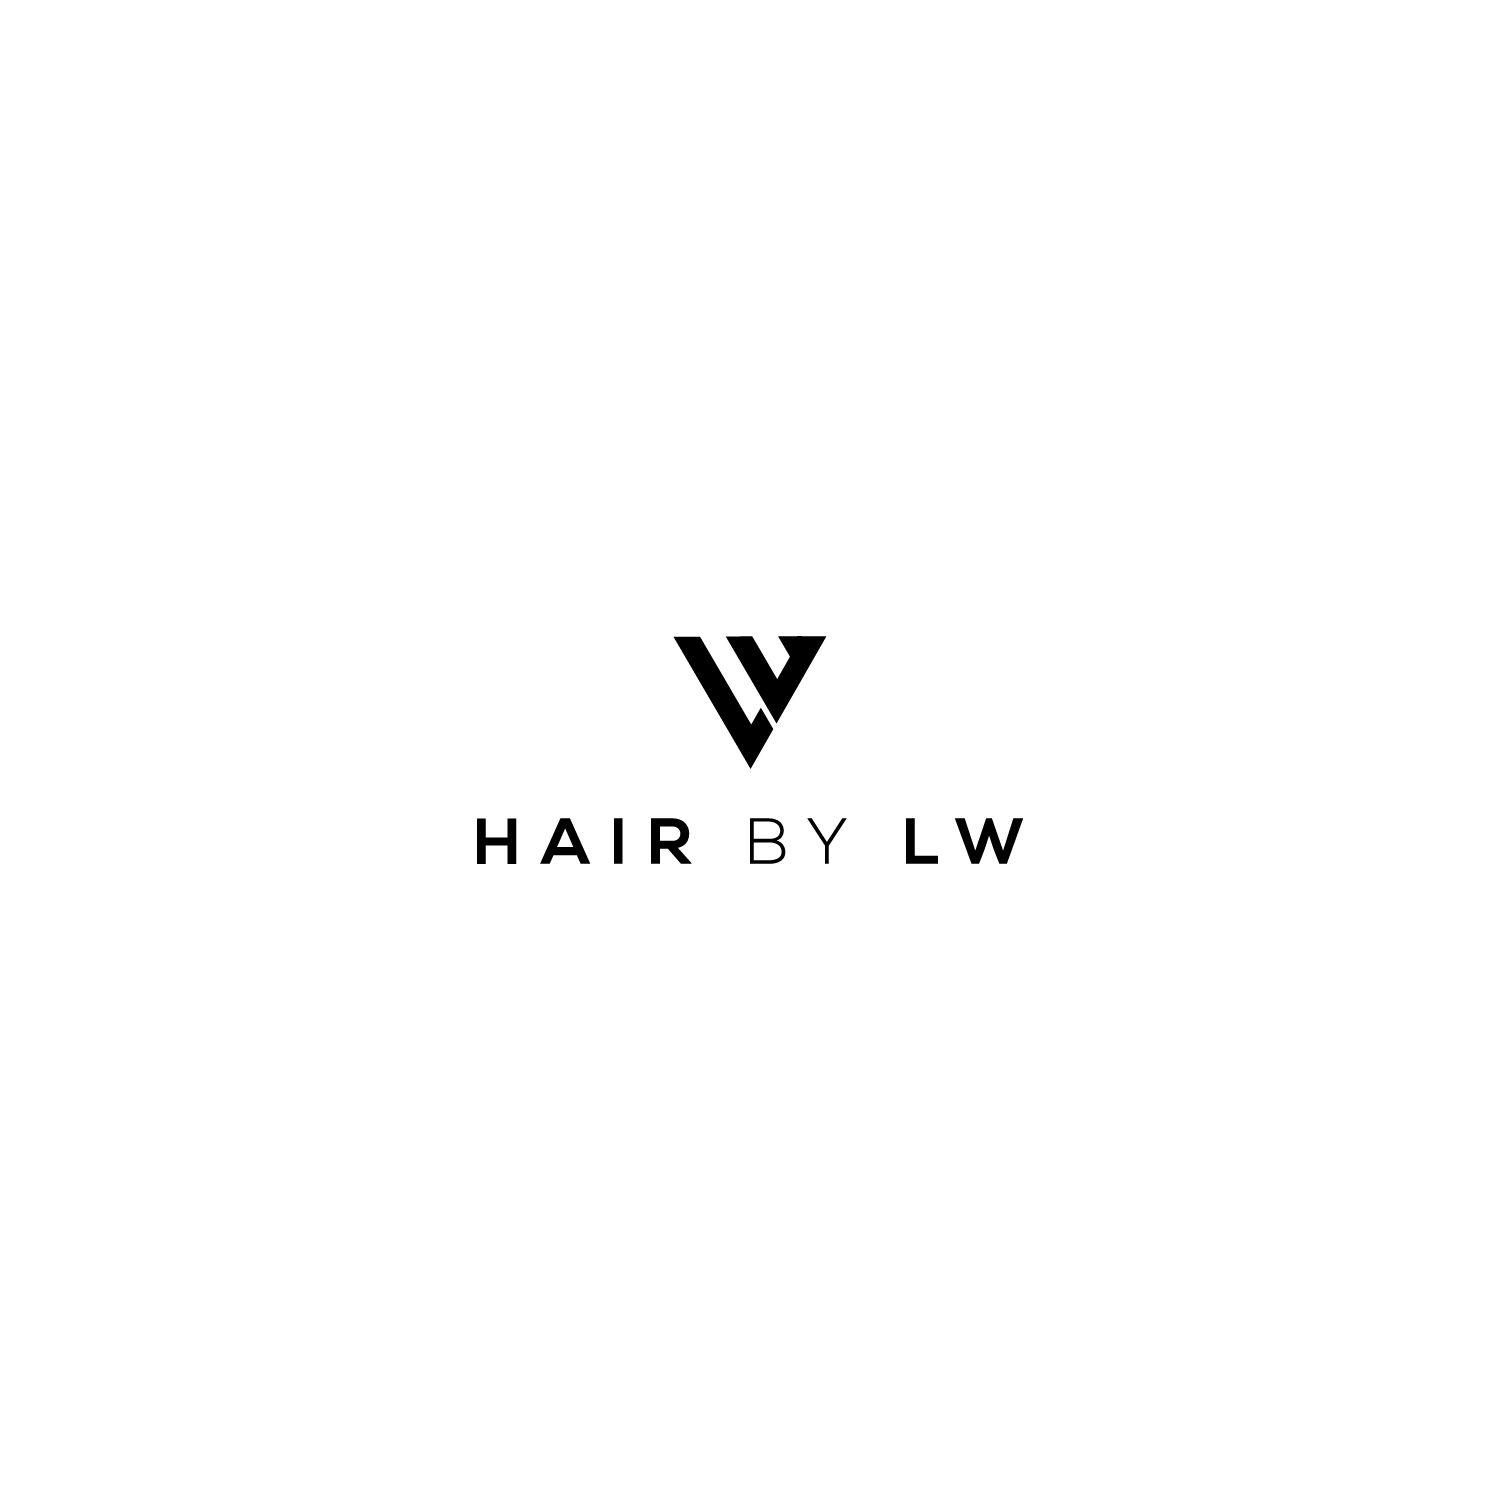 LW Logo - Business Logo Design for Hair by Lindsay Weflen Or Hair